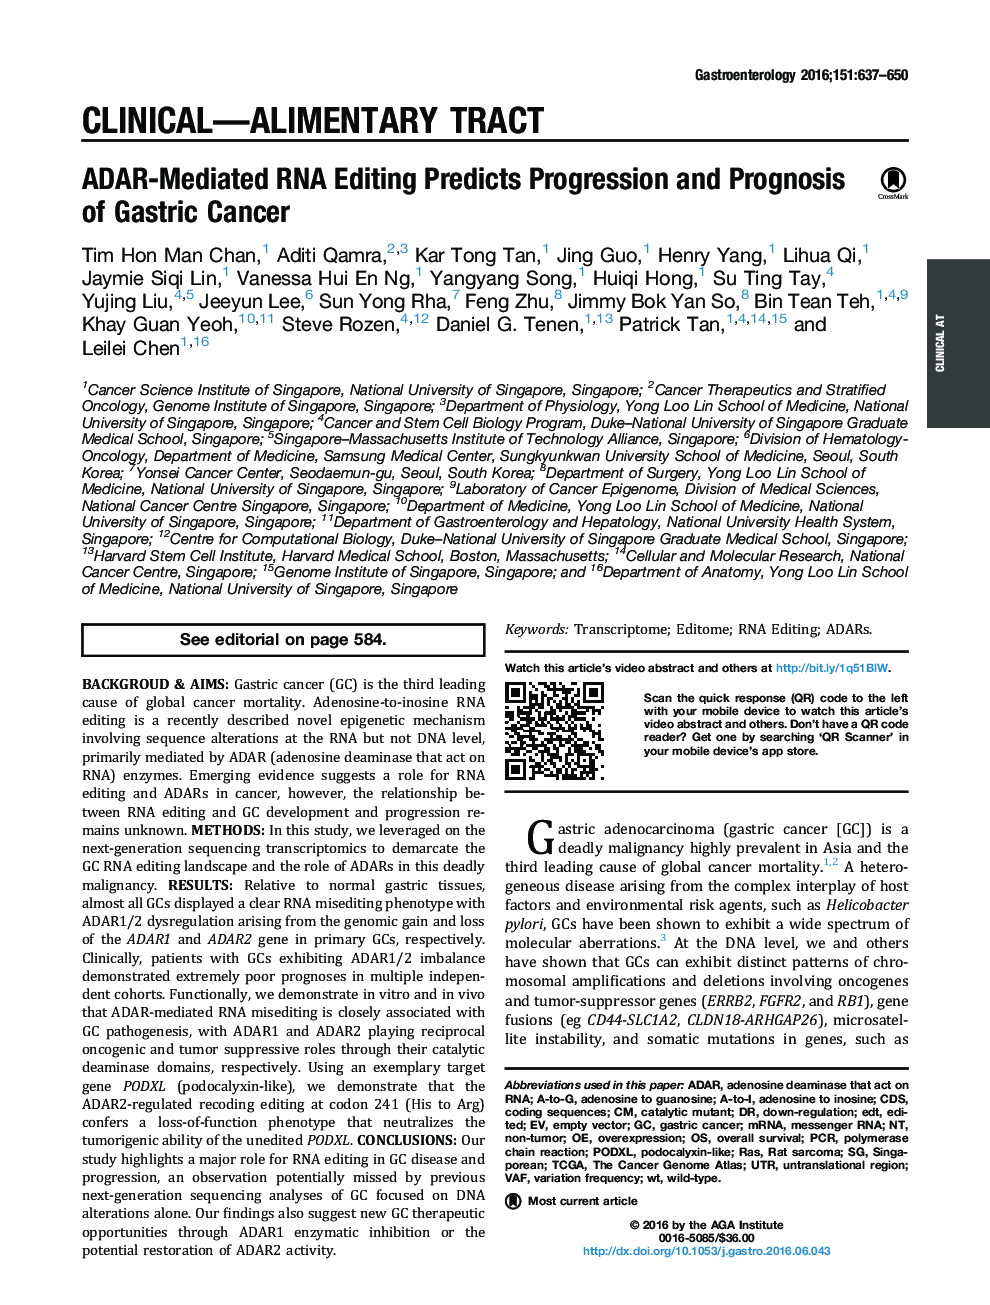 ADAR-Mediated RNA Editing Predicts Progression and Prognosis of Gastric Cancer